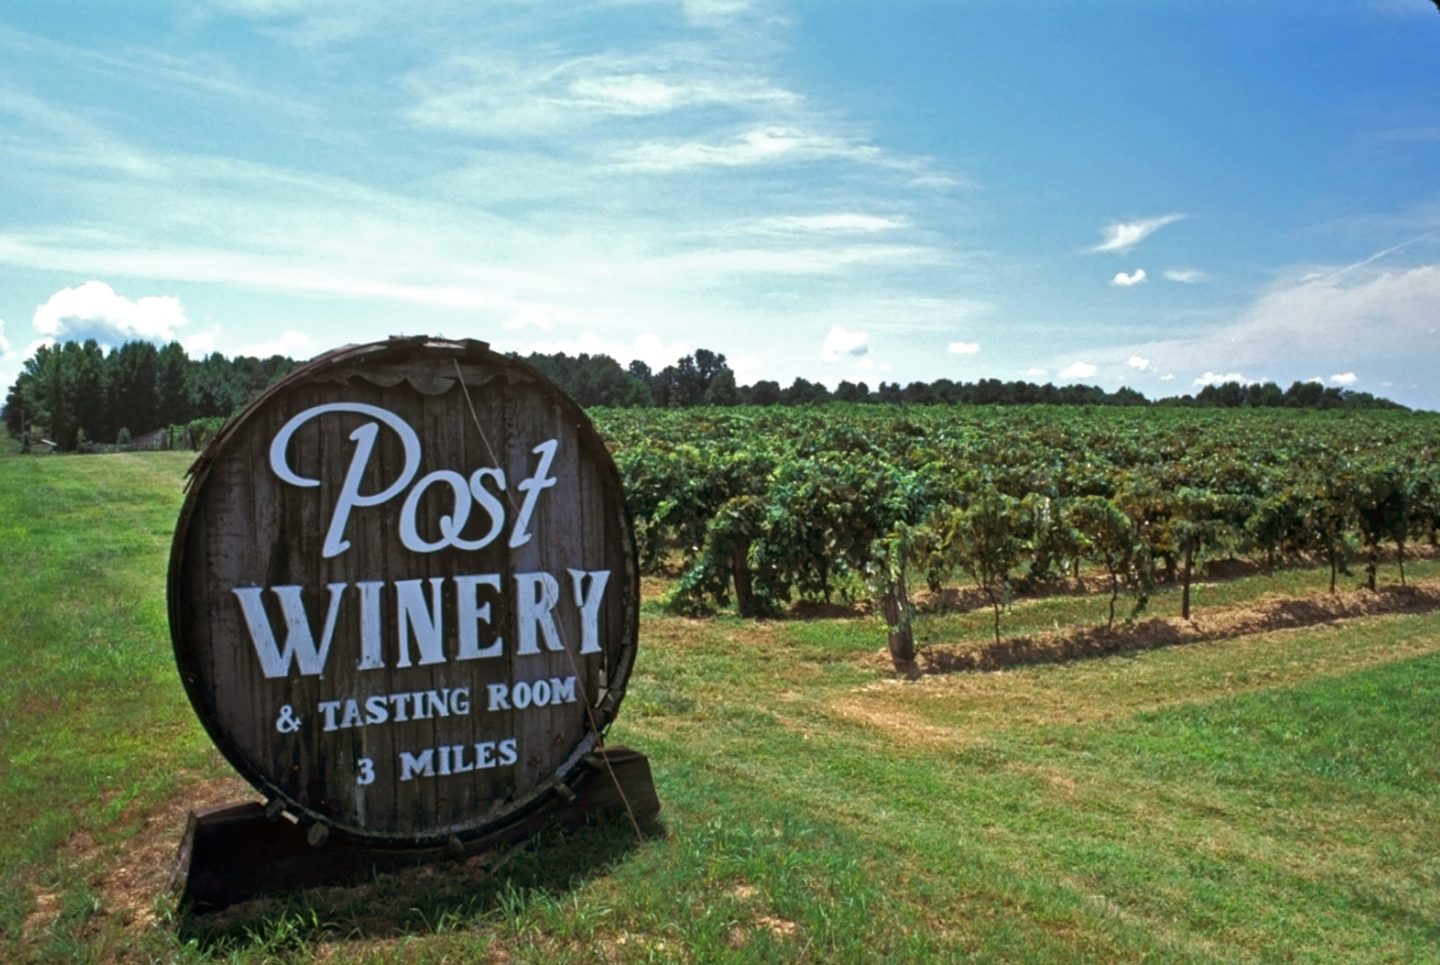 Post winery sign in an Arkansas vineyard